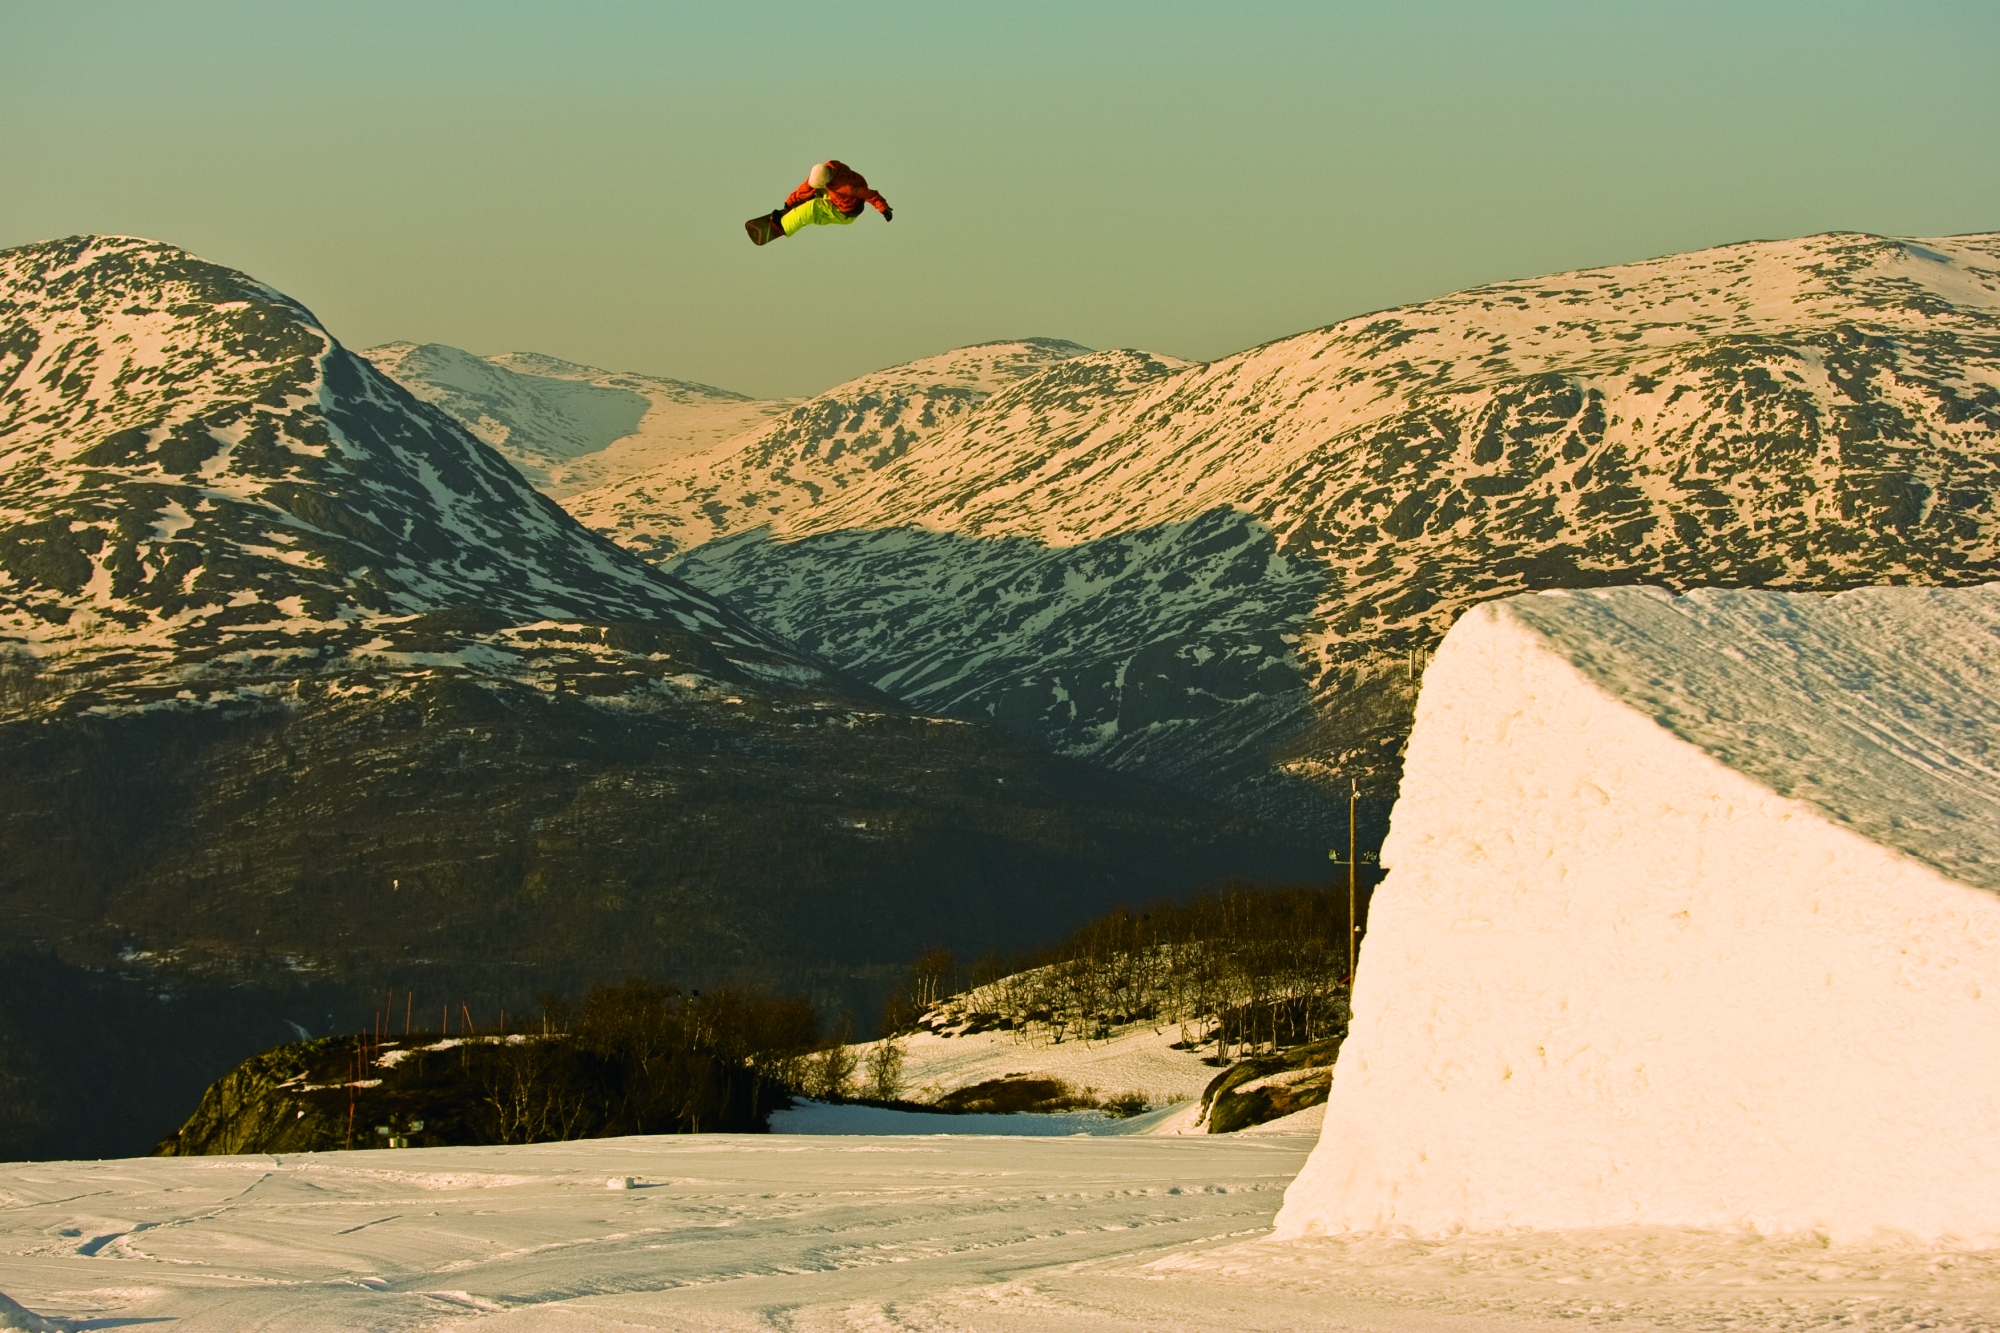 Burton Snowboards, Hemsedal, Norway